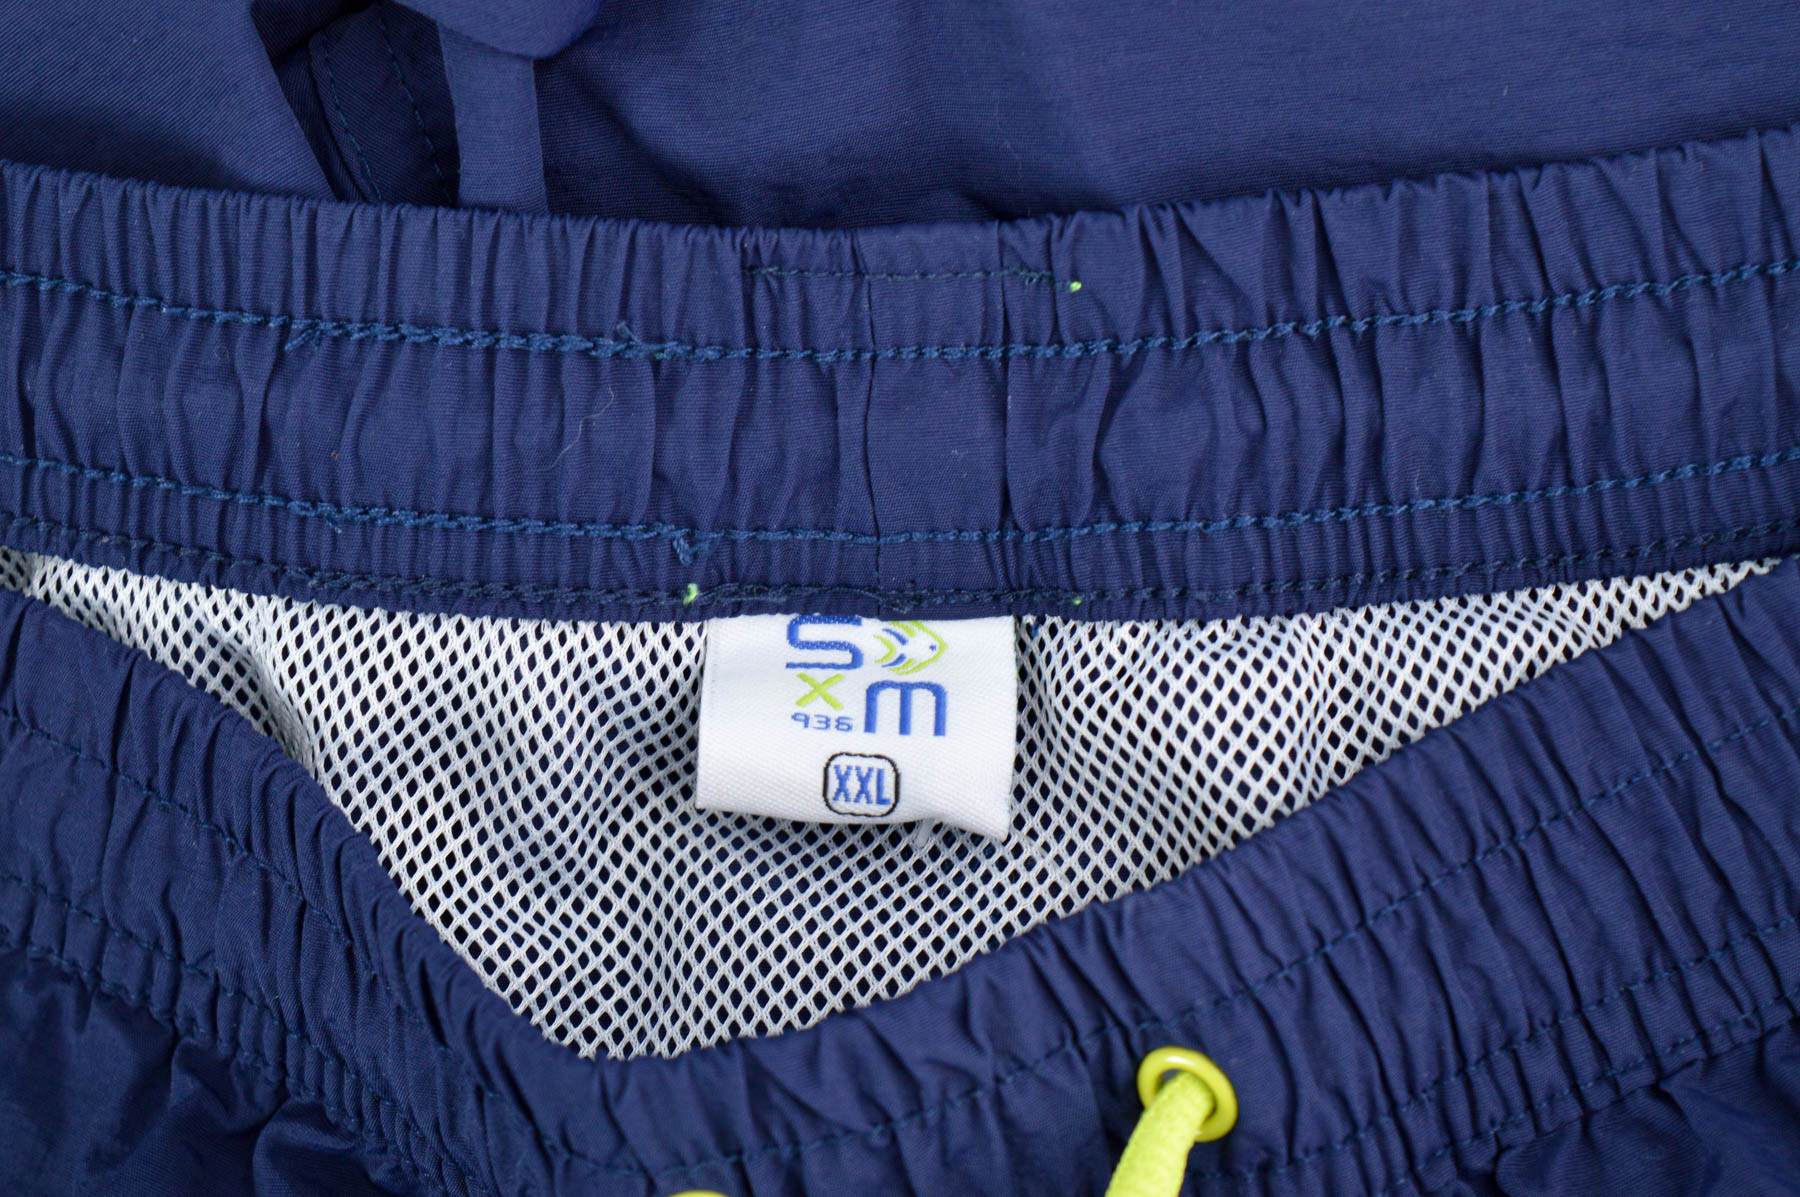 Men's shorts - S X M - 2